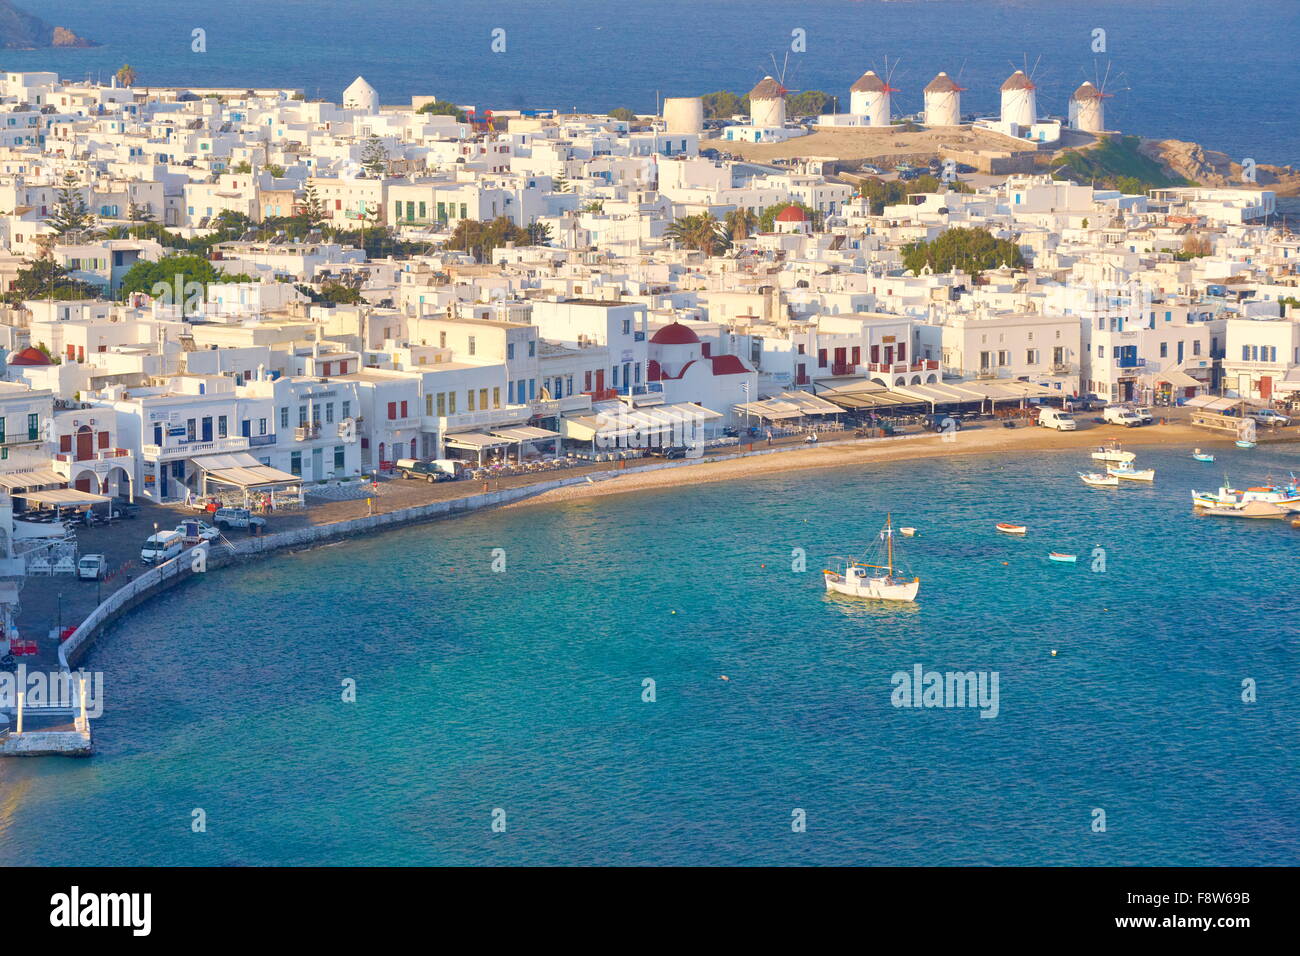 Aerial view of Mykonos Town, Chora - Mykonos Island, Greece Stock Photo